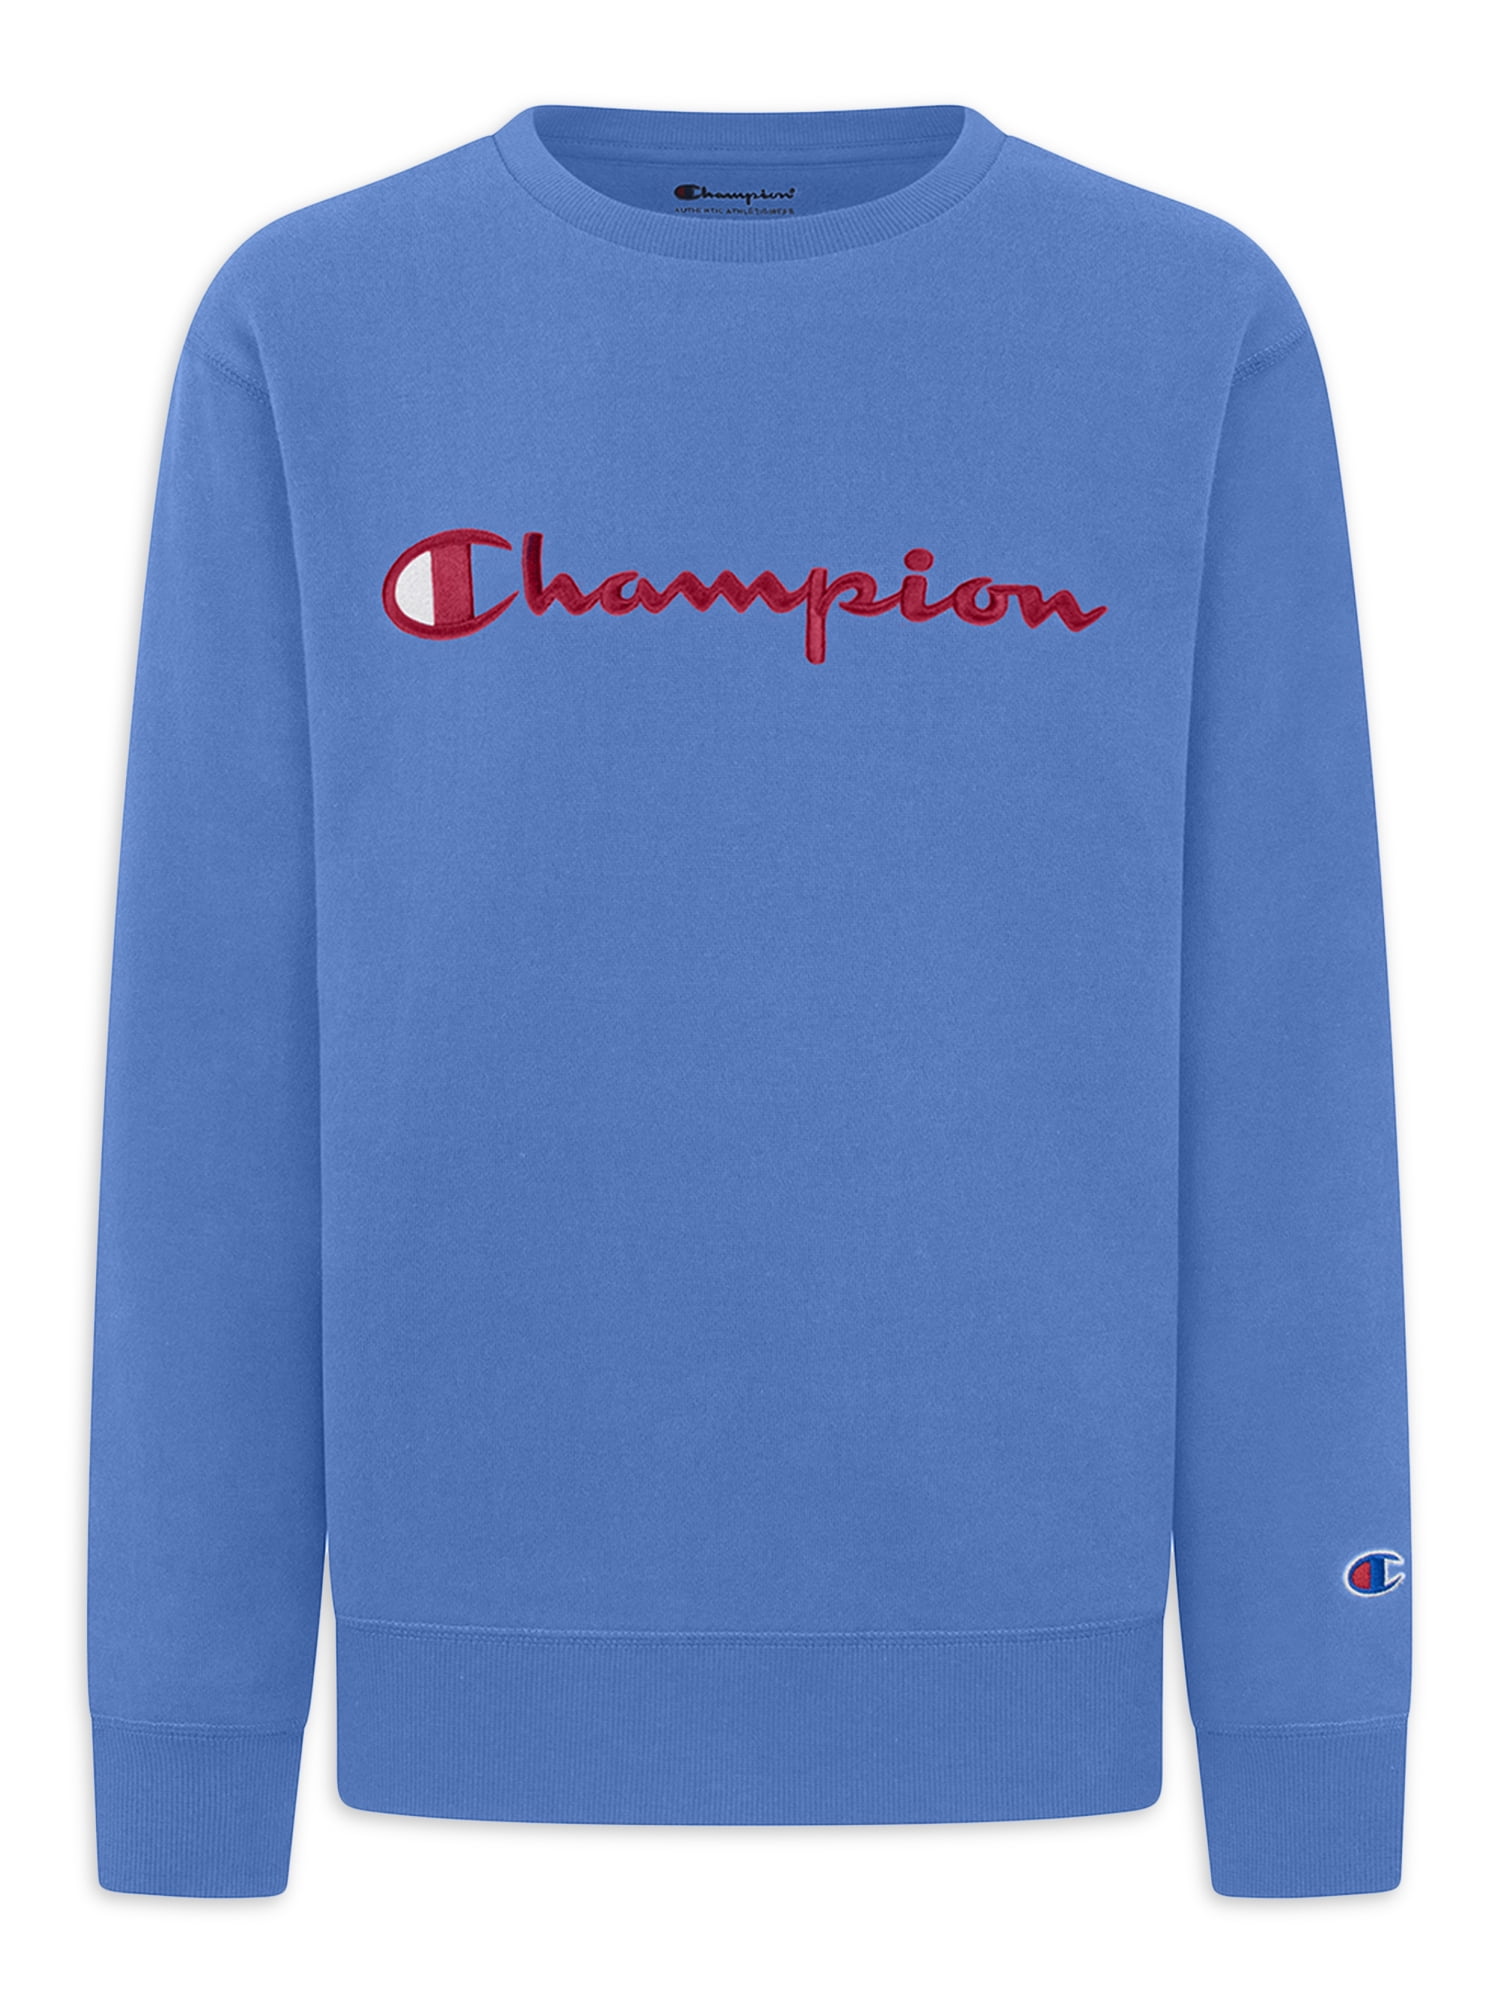 Crewneck Signature 8-20 Fleece Champion Sizes Sweatshirt, Boys